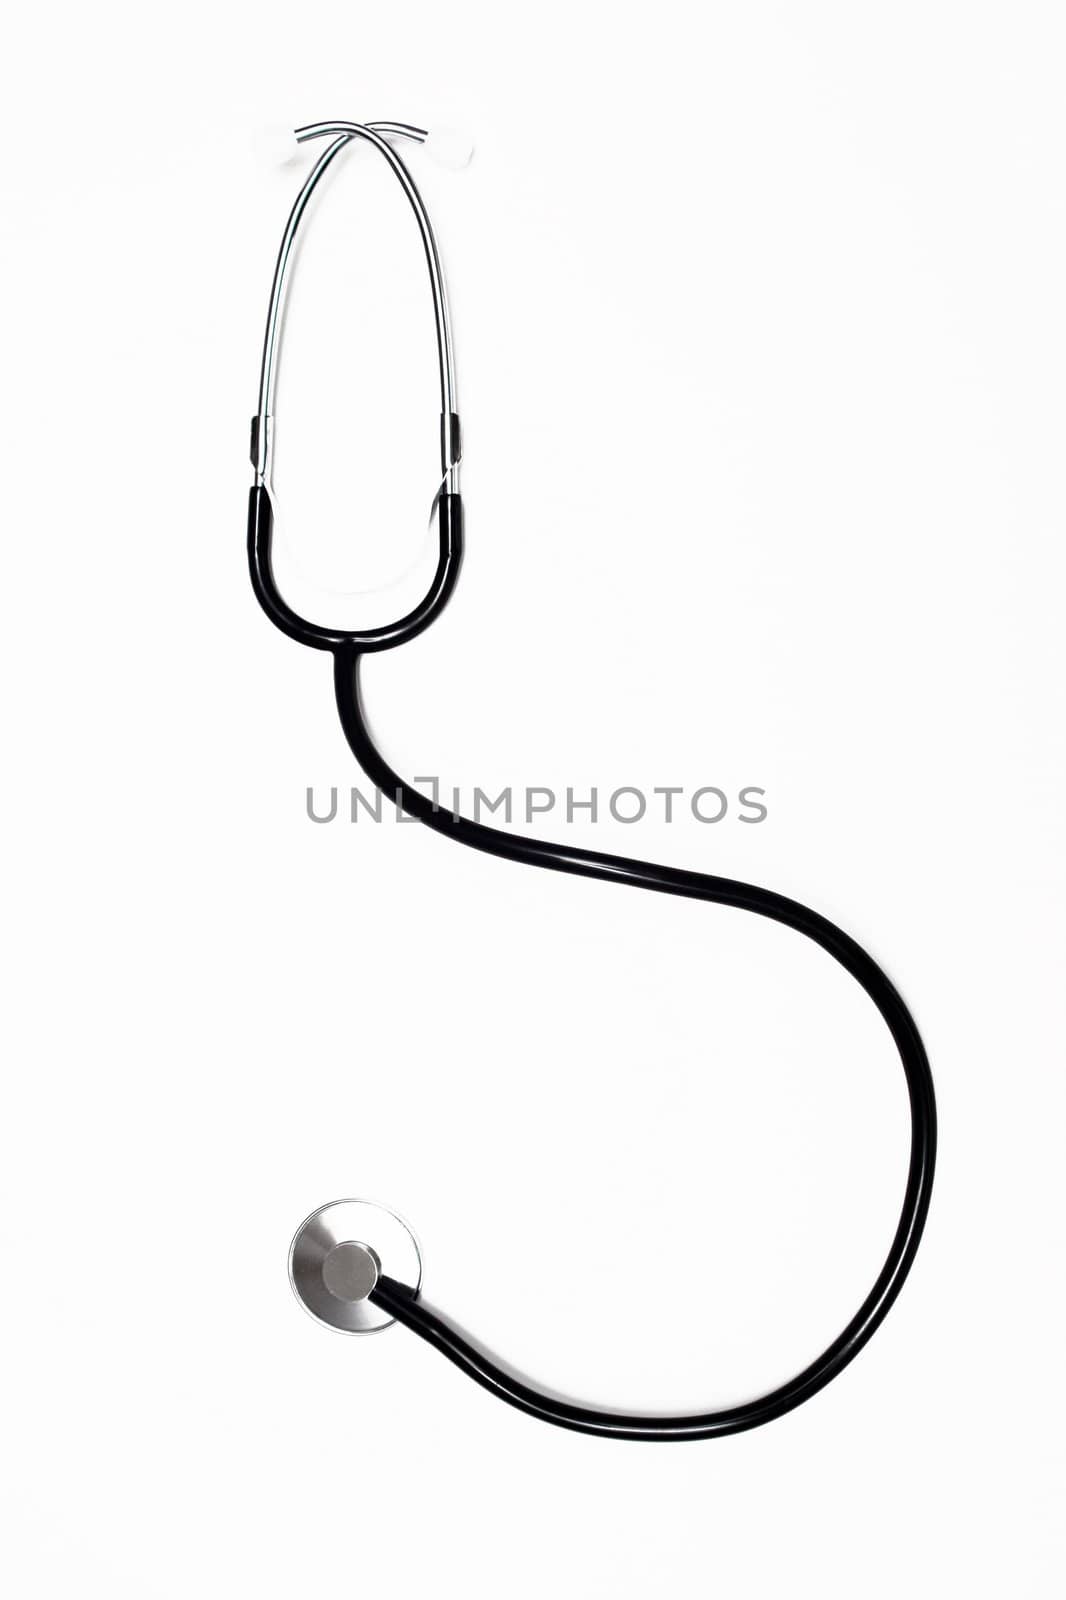 Stethoscope on the white background